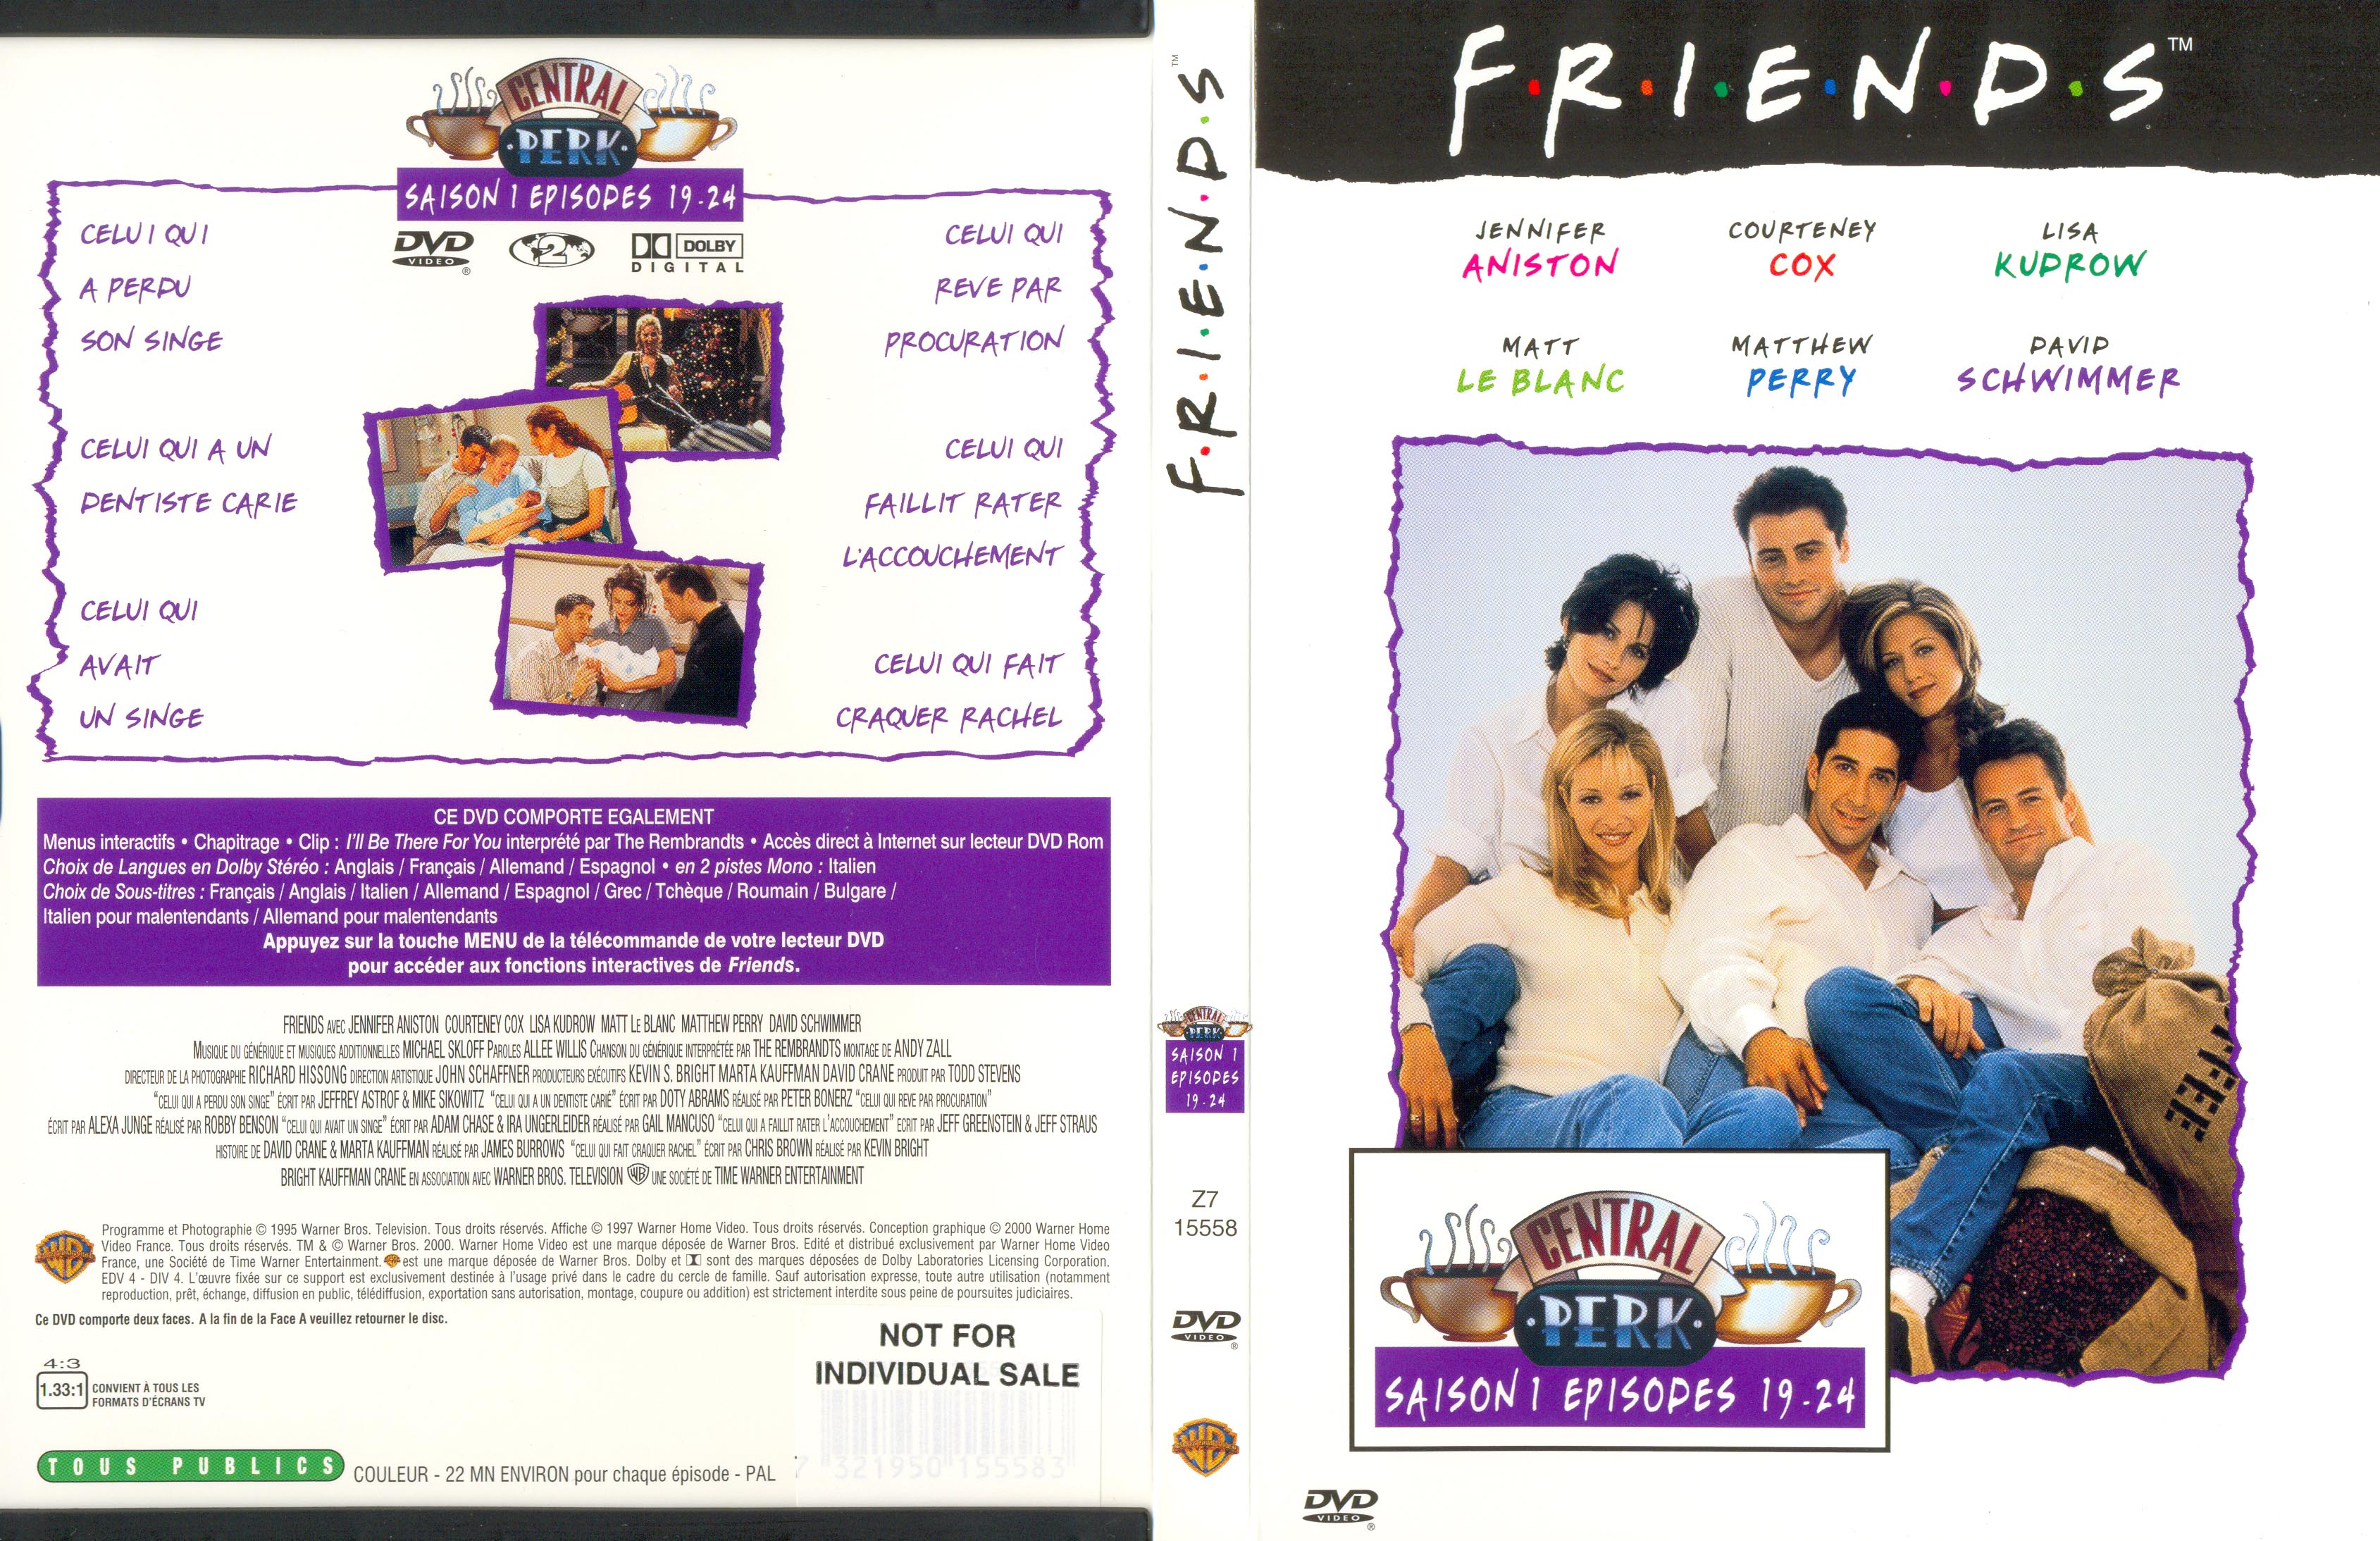 Jaquette DVD Friends saison 1 dvd 4